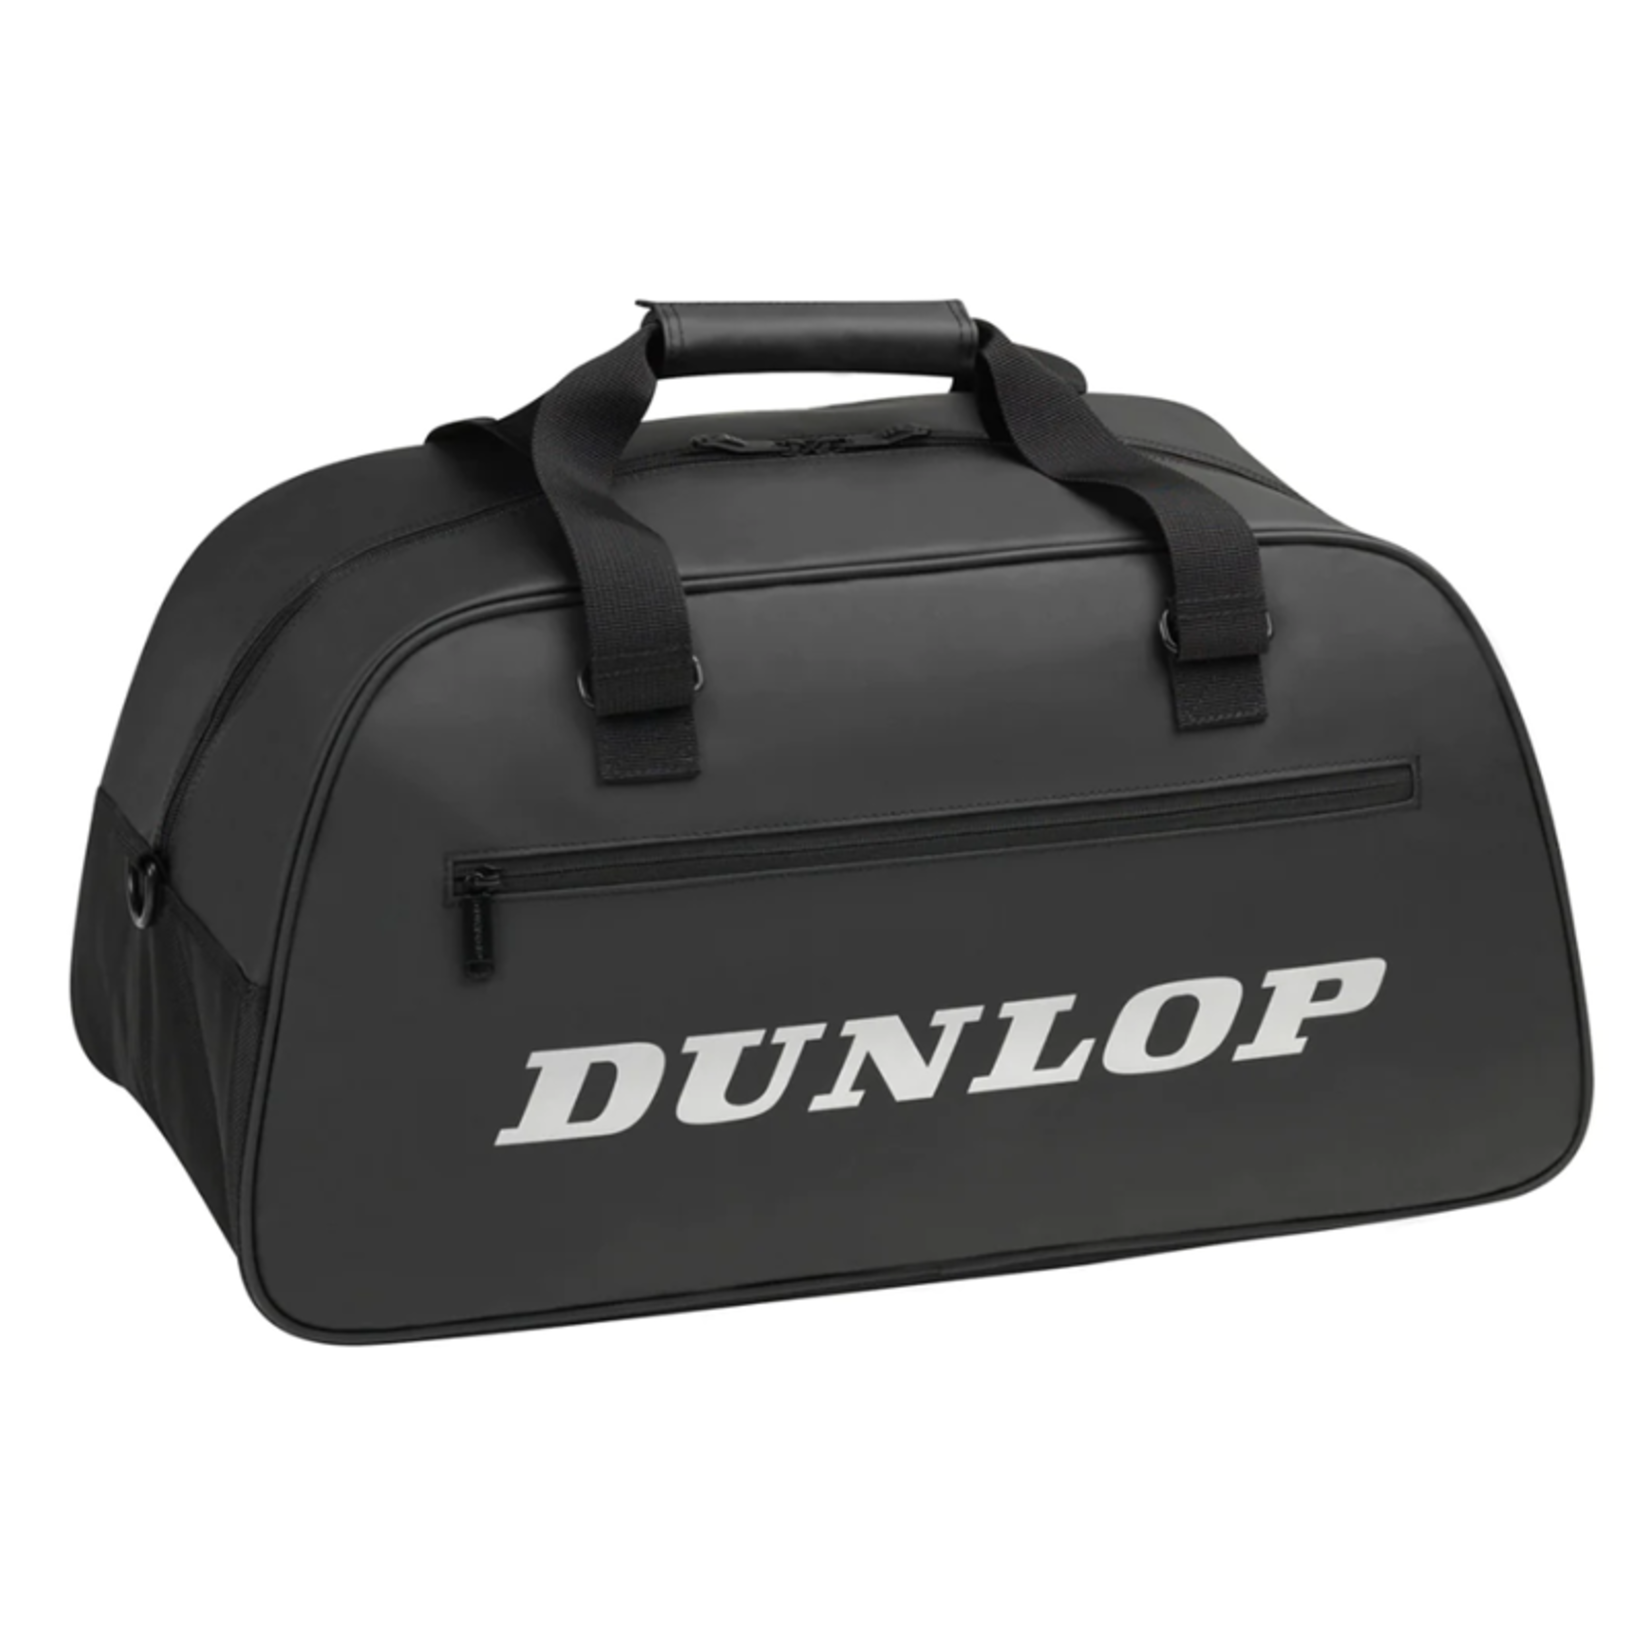 Dunlop Dunlop Duffle Bag